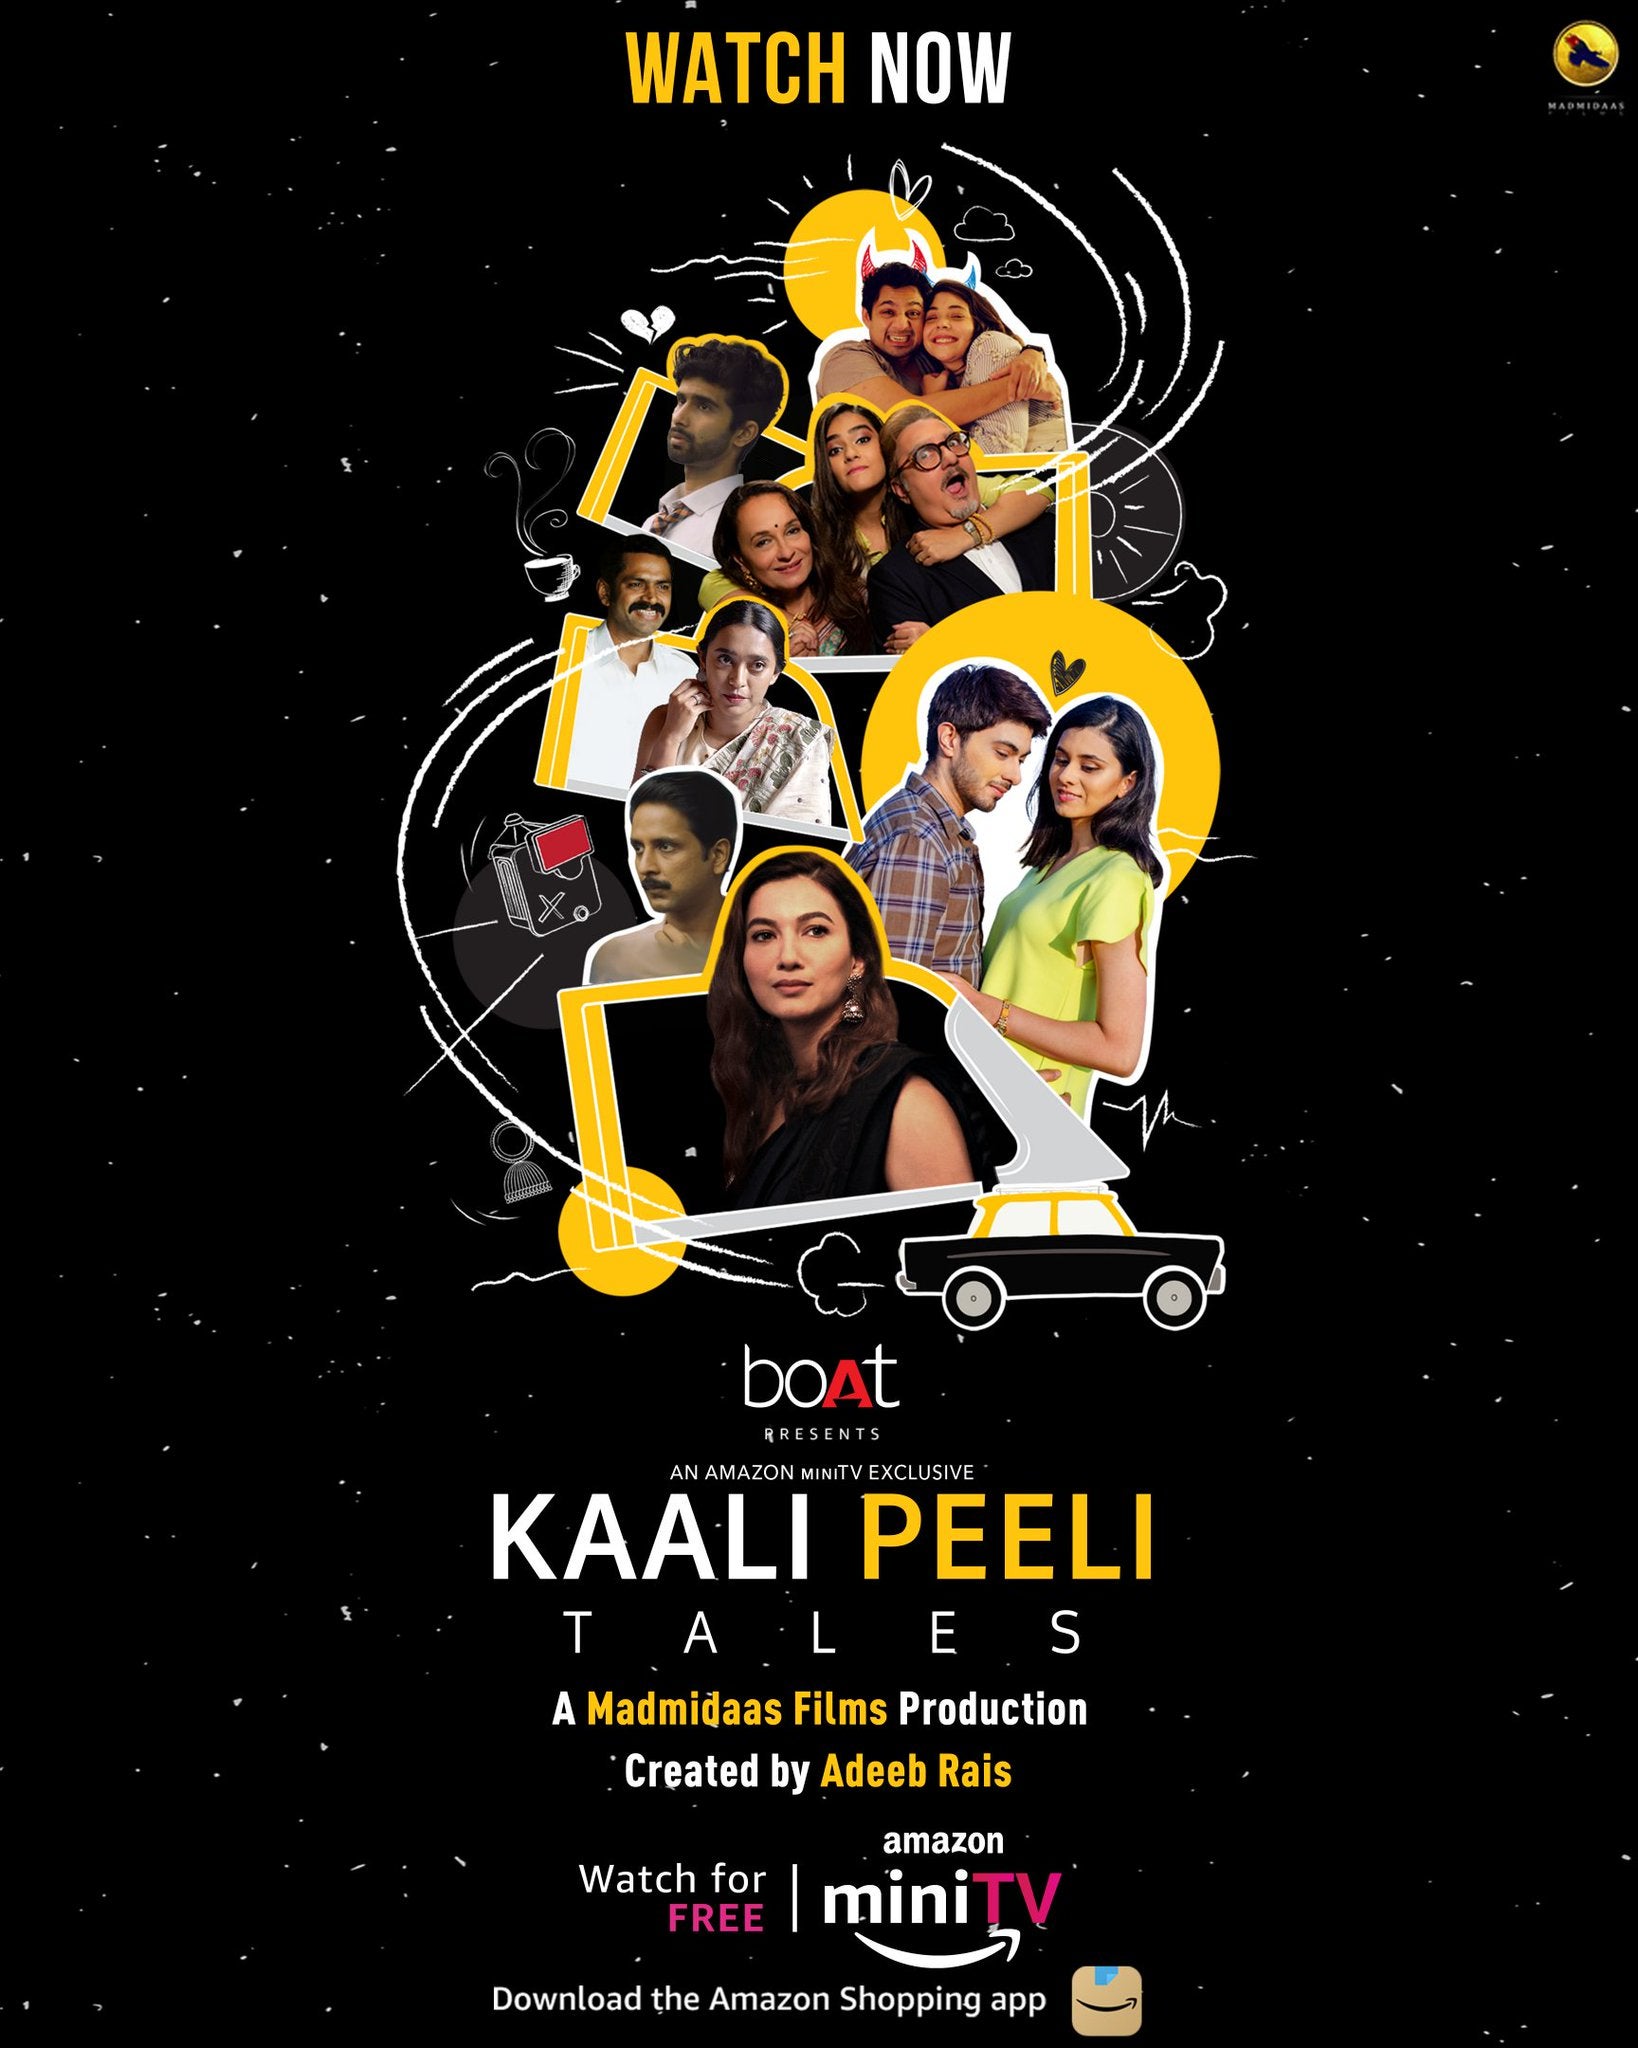 TV ratings for Kaali Peeli Tales in Japan. Amazon mini TV TV series